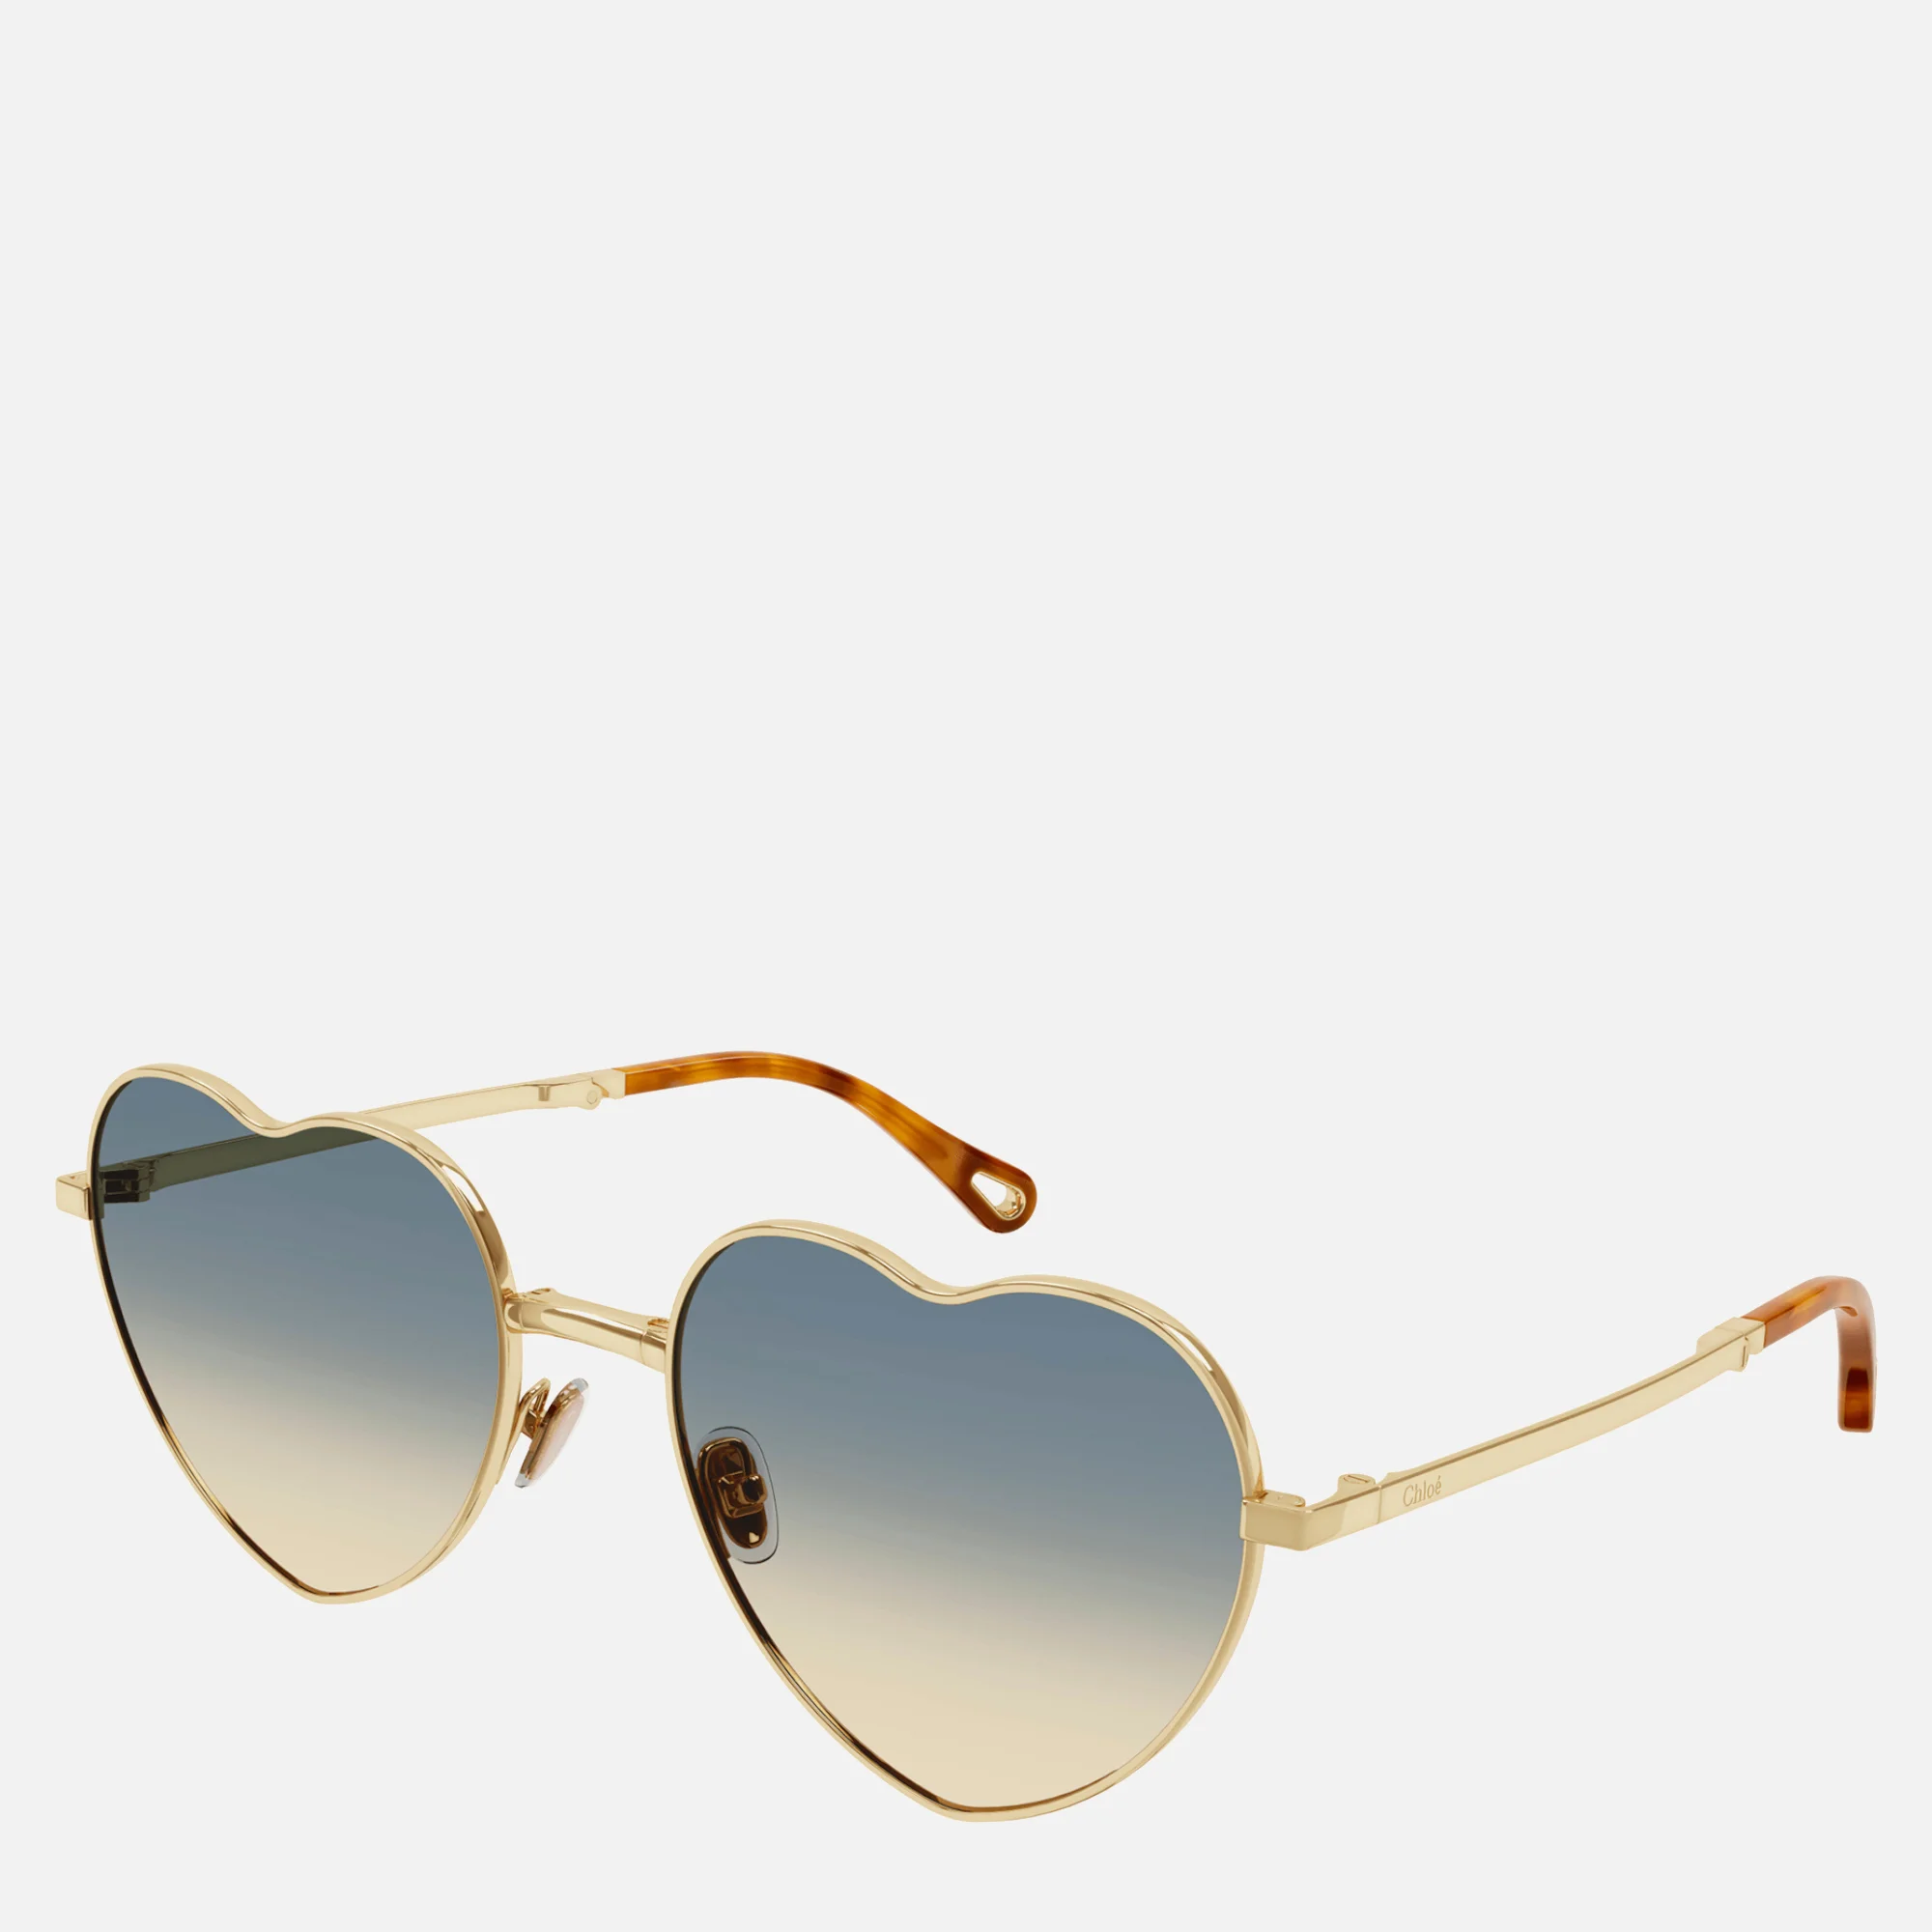 Chloé Women's Heart Frame Sunglasses - Gold/Grey Image 1